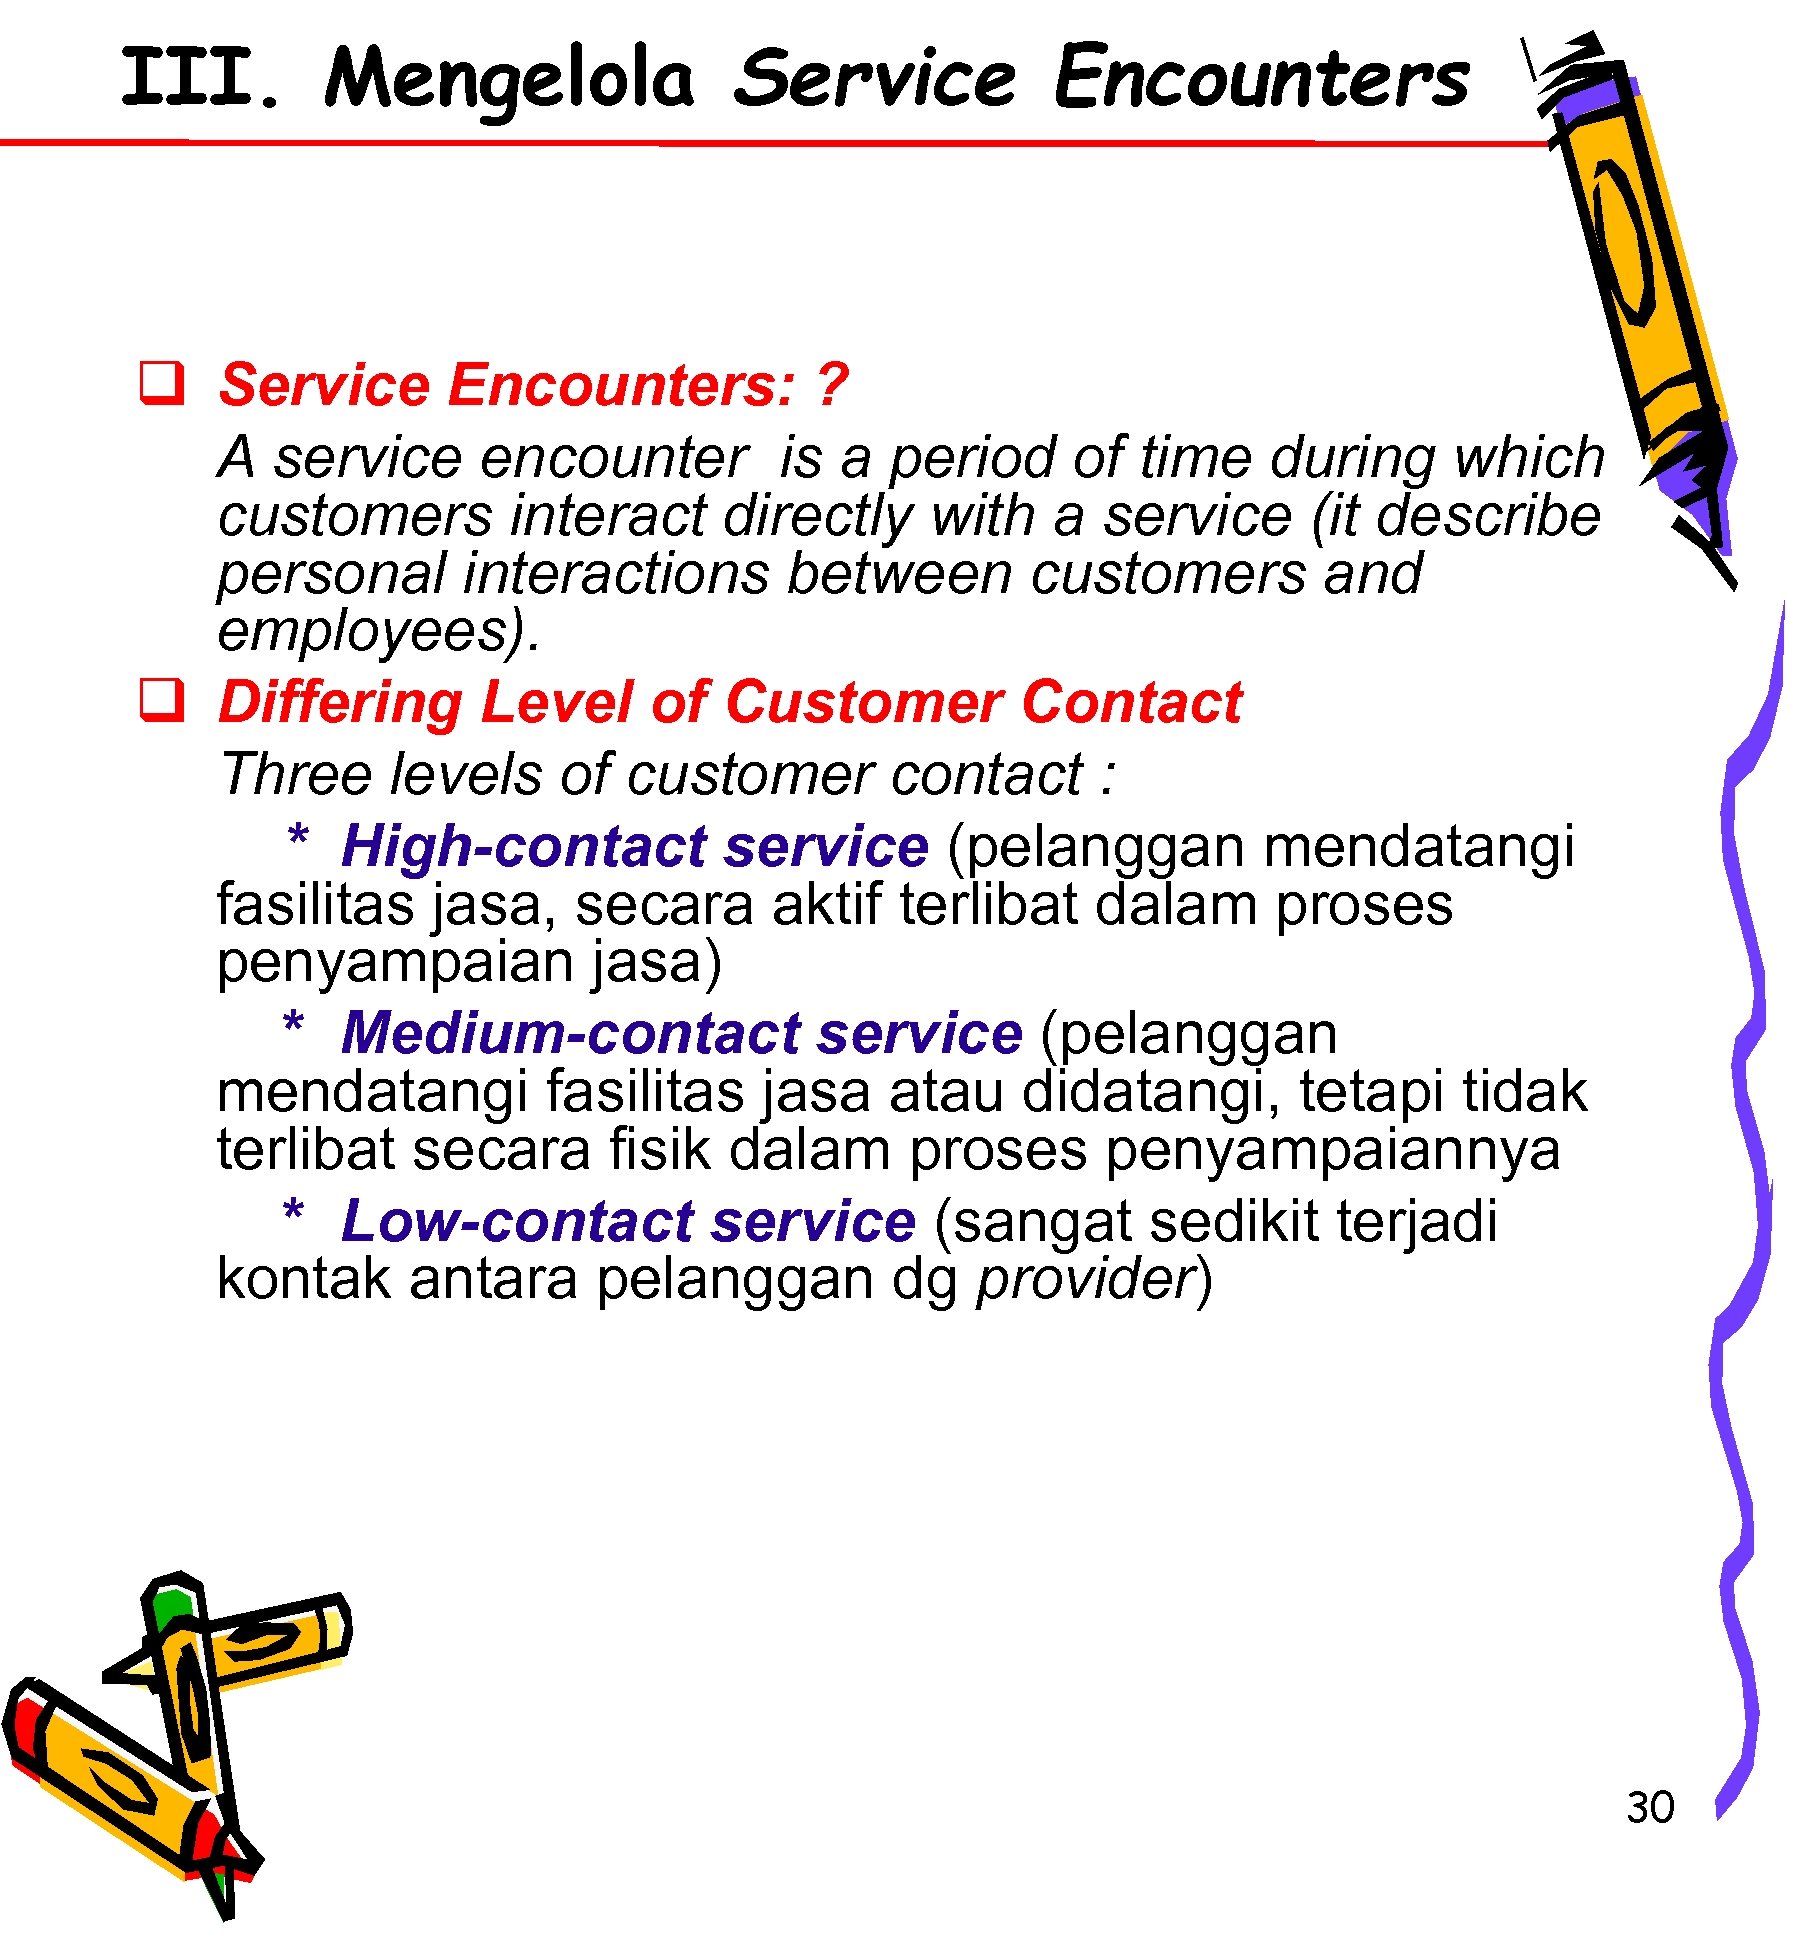 III. Mengelola Service Encounters q Service Encounters: ? A service encounter is a period